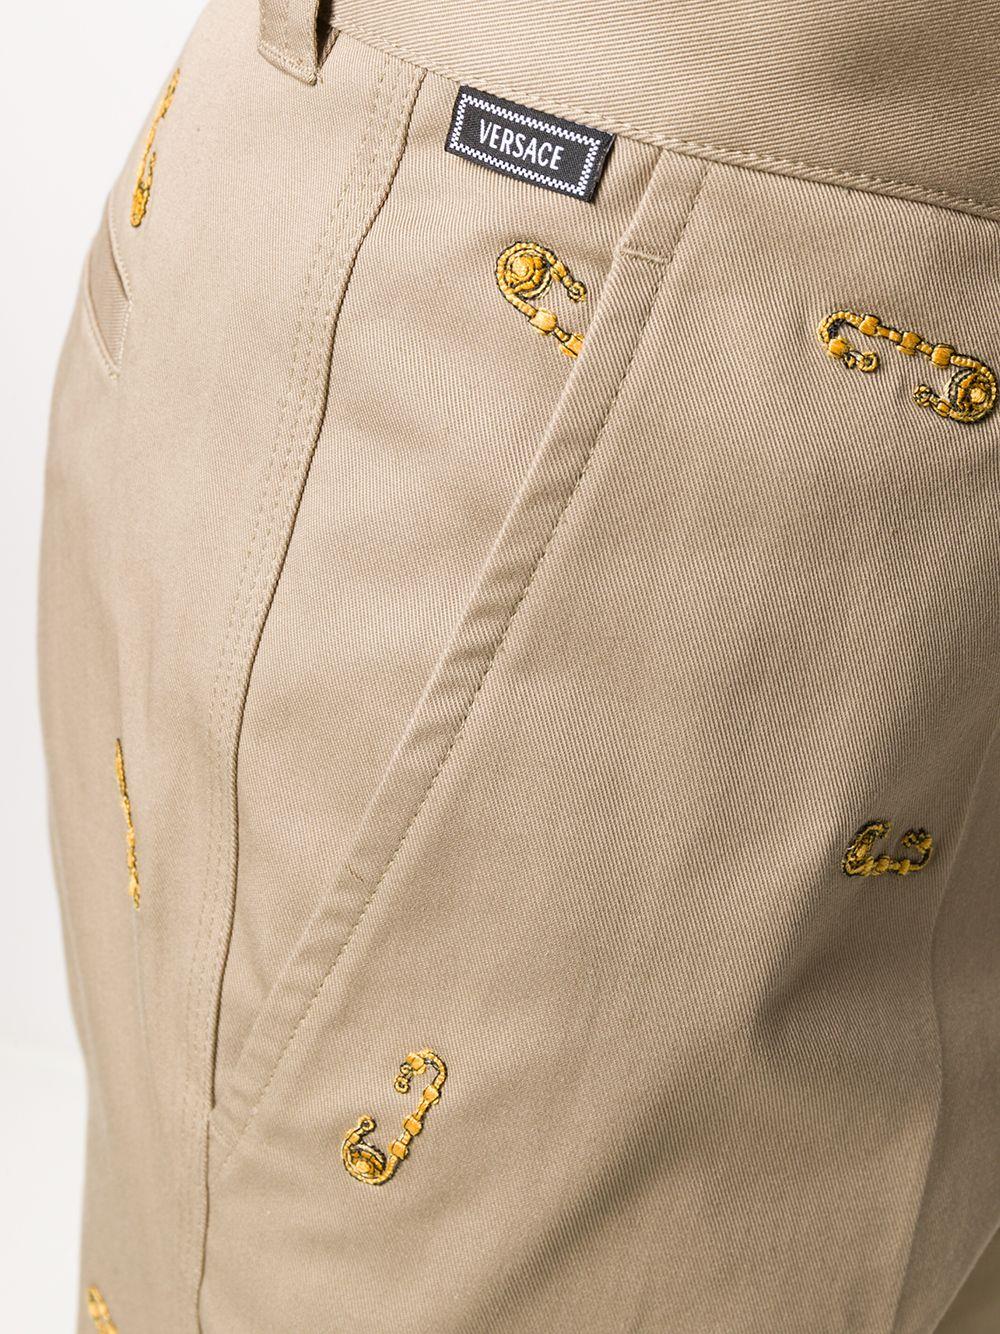 embroidered khaki pants